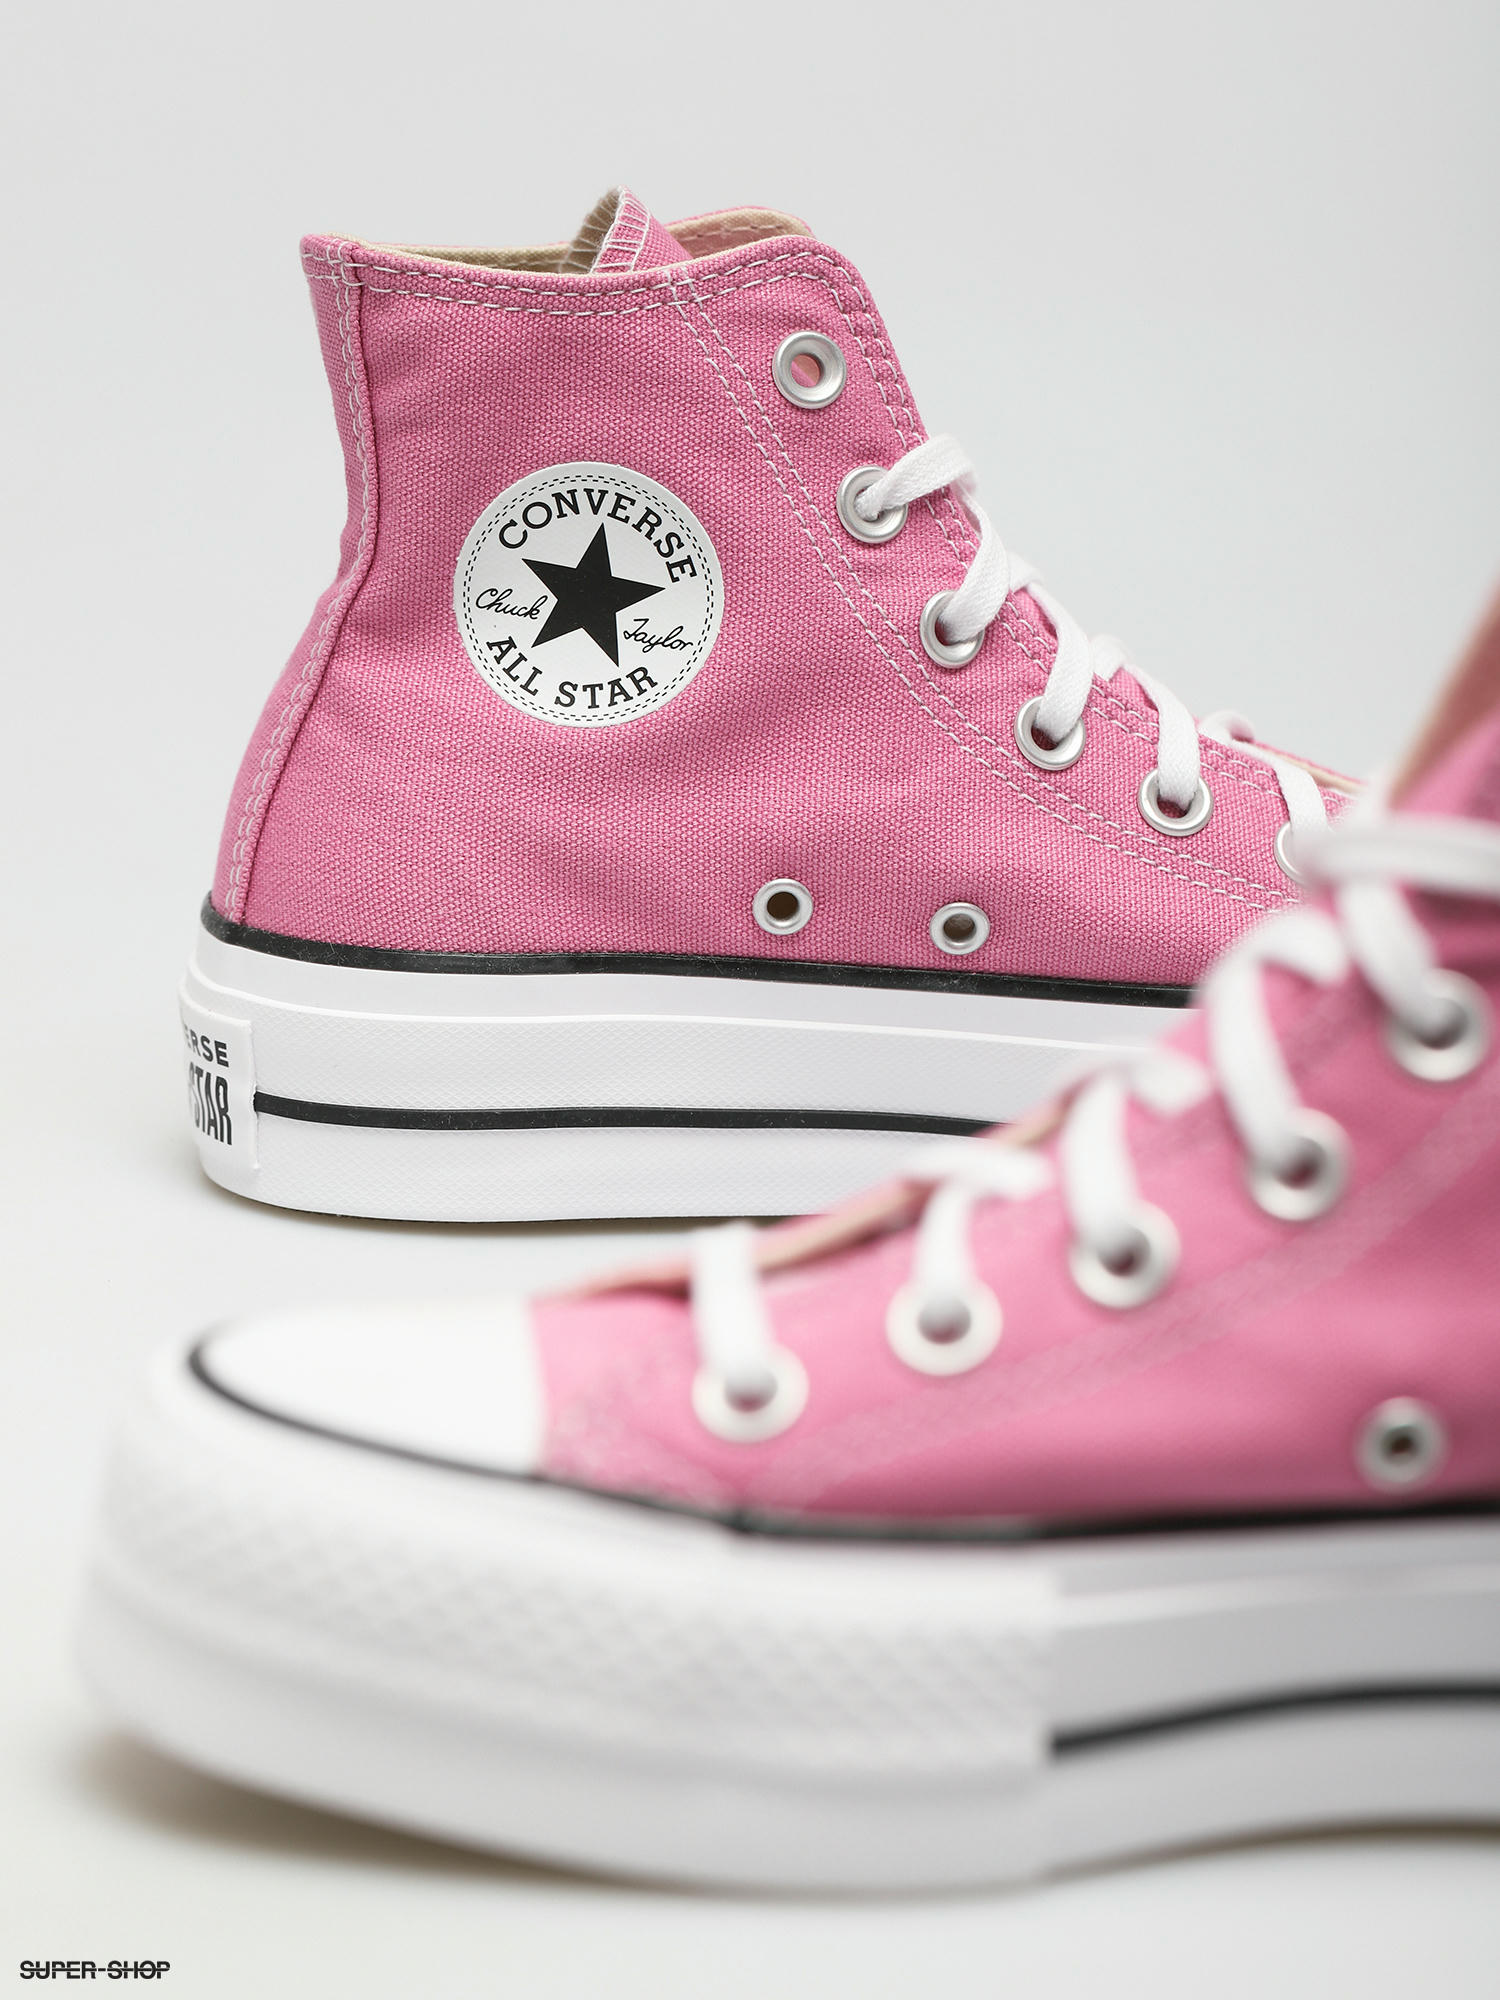 Chuck All Star Lift Shoes Wmn (pink/blue)